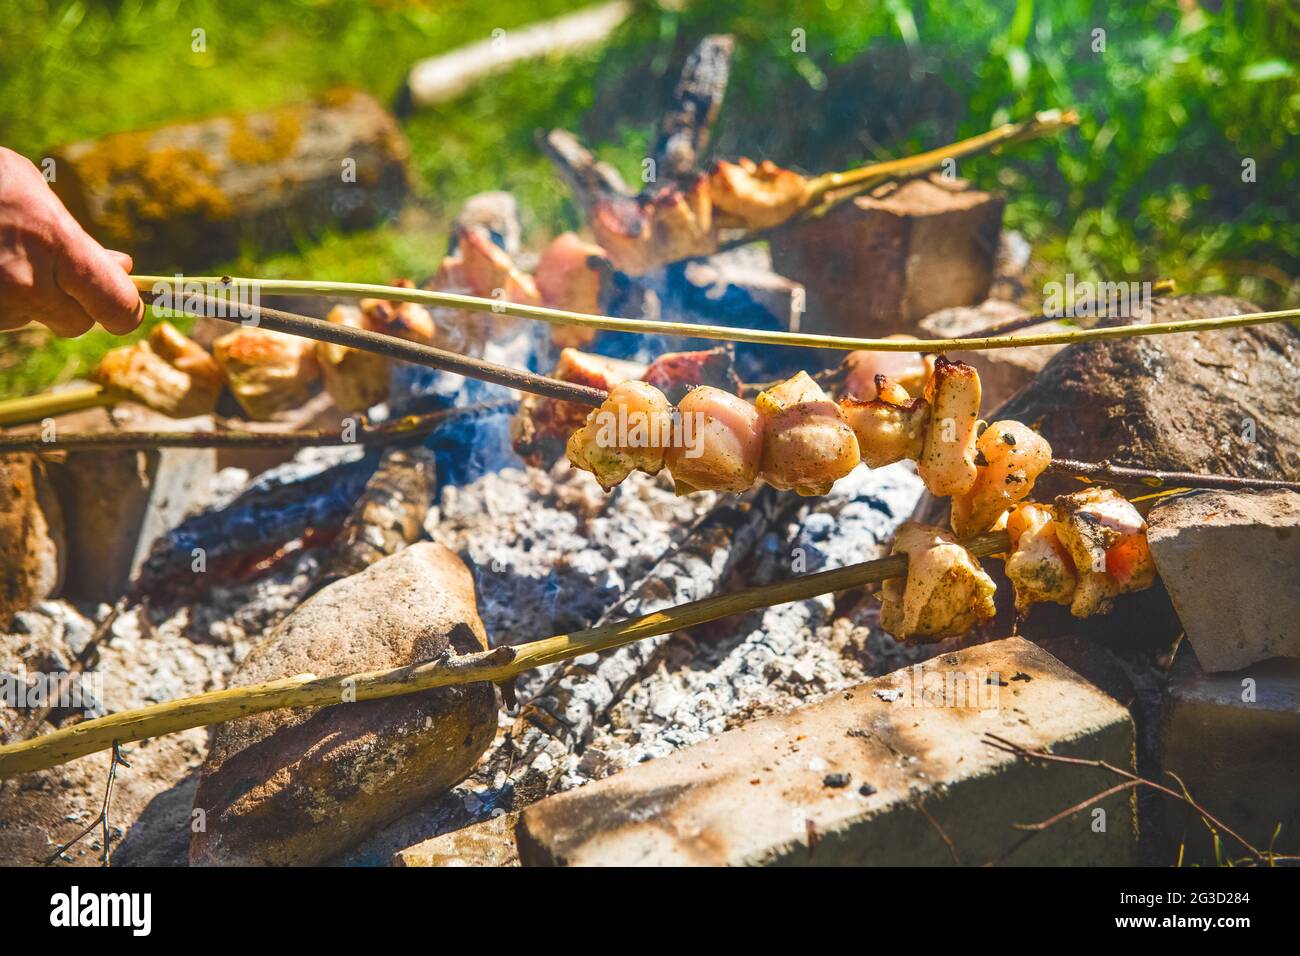 Cuisiner de la viande crue de la nourriture barbecue sur un bâton sur un feu, camper avec des amis, repos extérieur. Banque D'Images